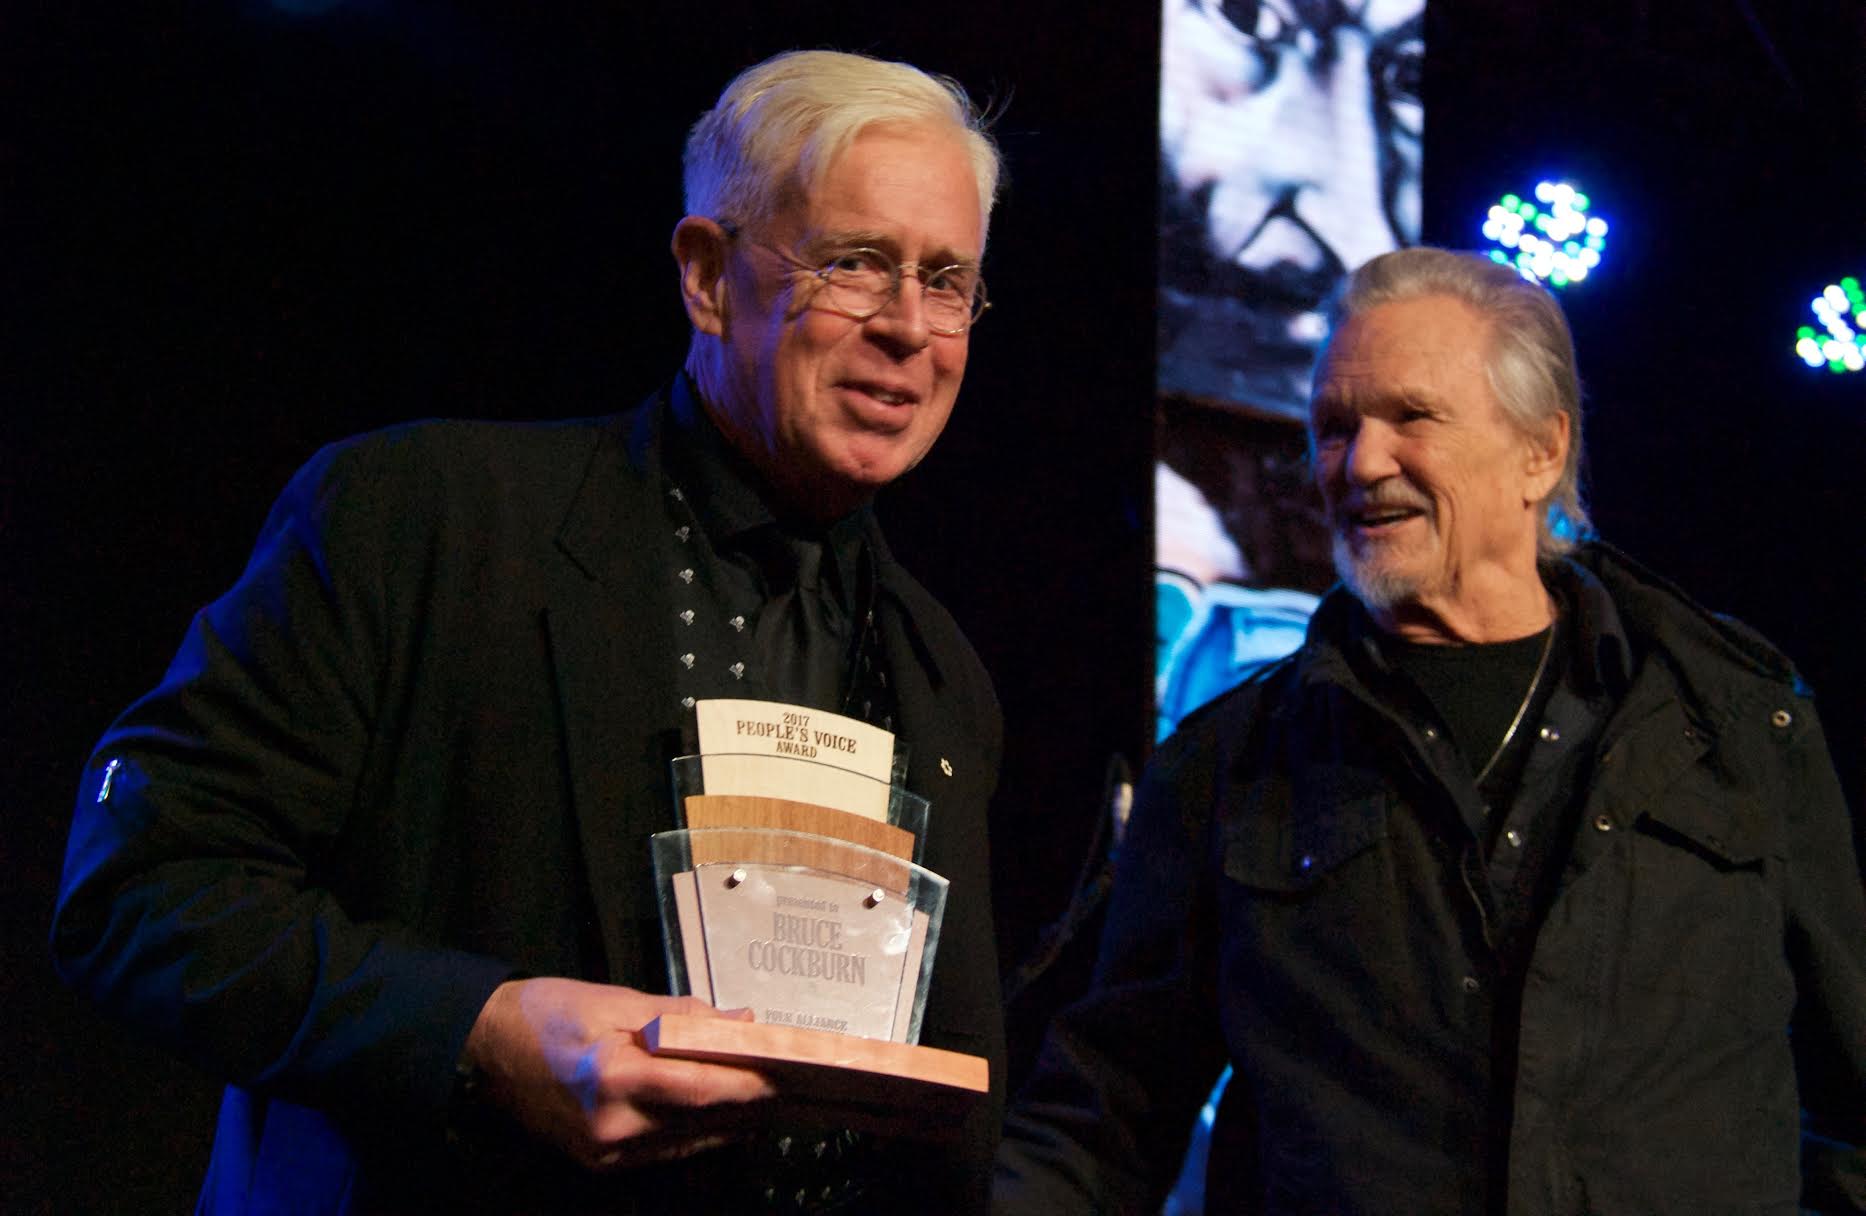 Kris Kristofferson, Bruce Cockburn Bring Star Power to Folk Alliance Awards